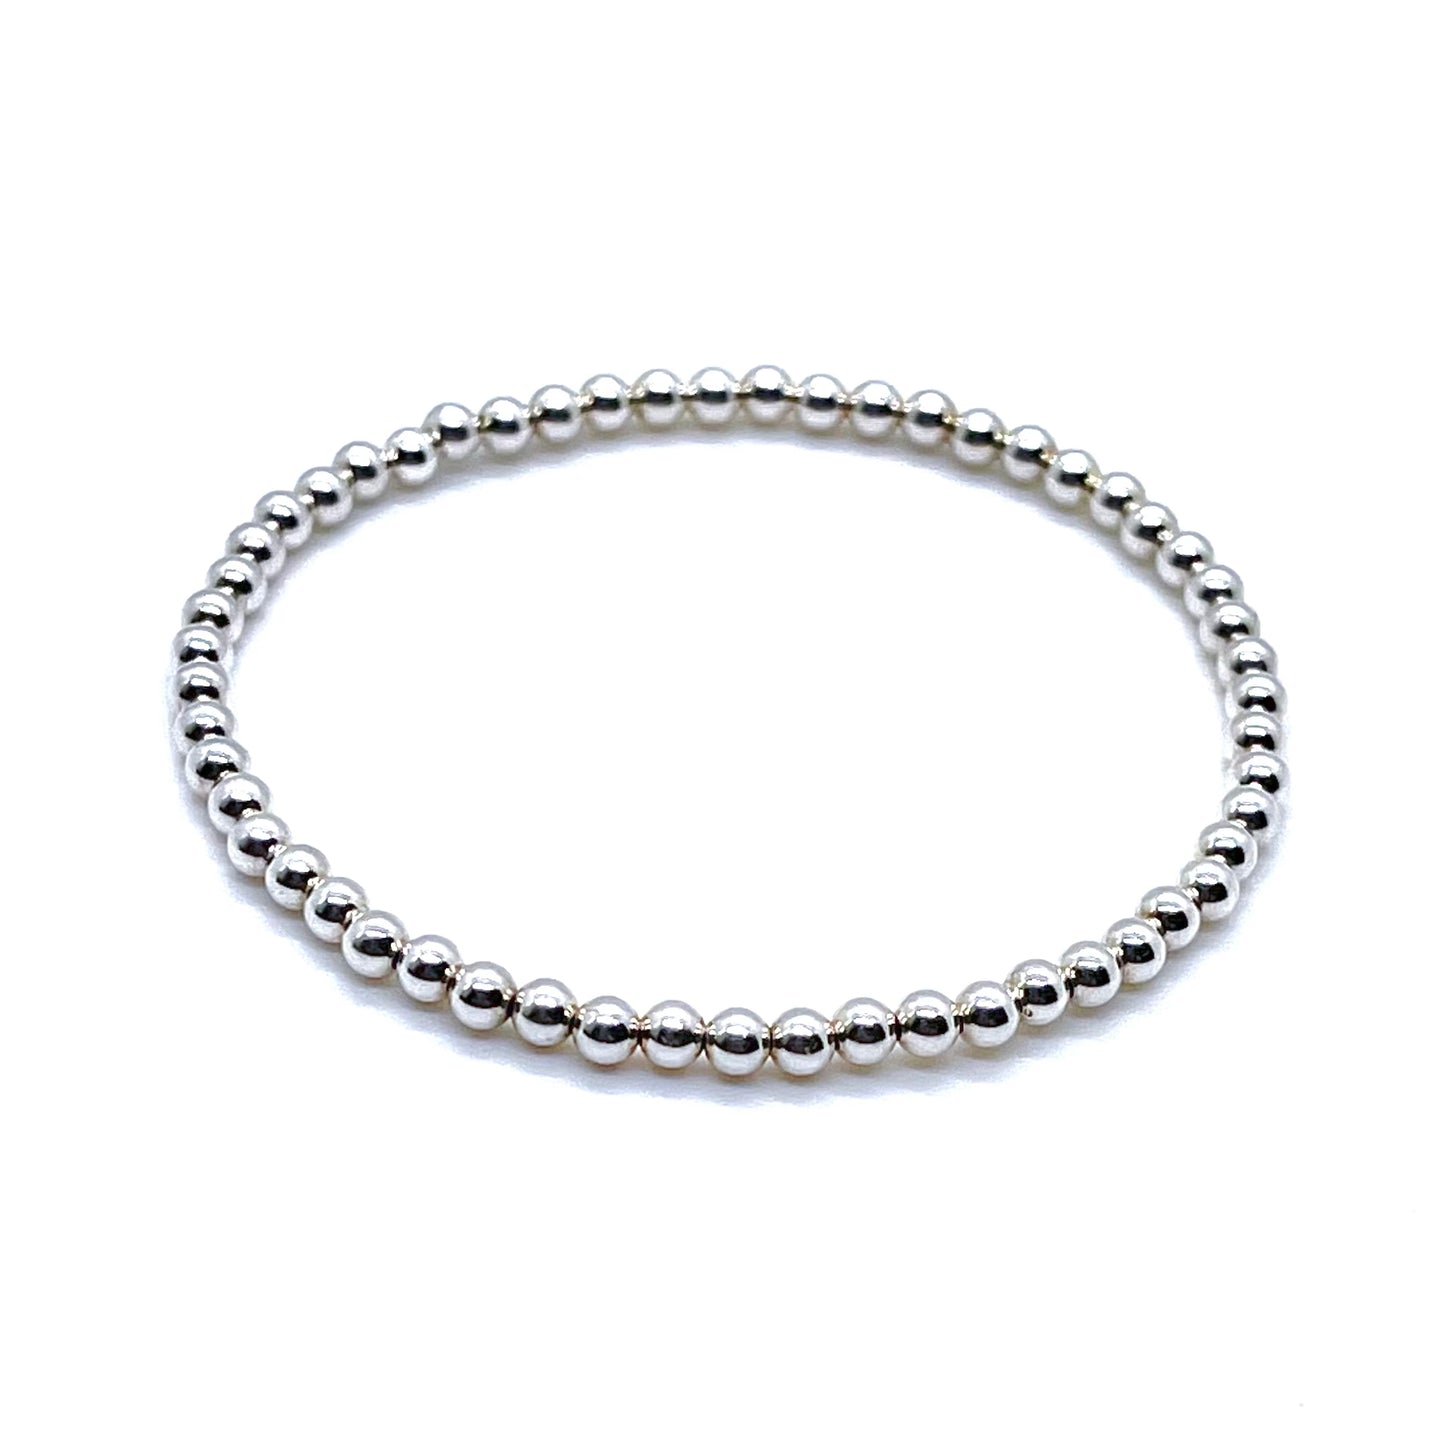 Sterling silver 3mm bead stretch bracelet.